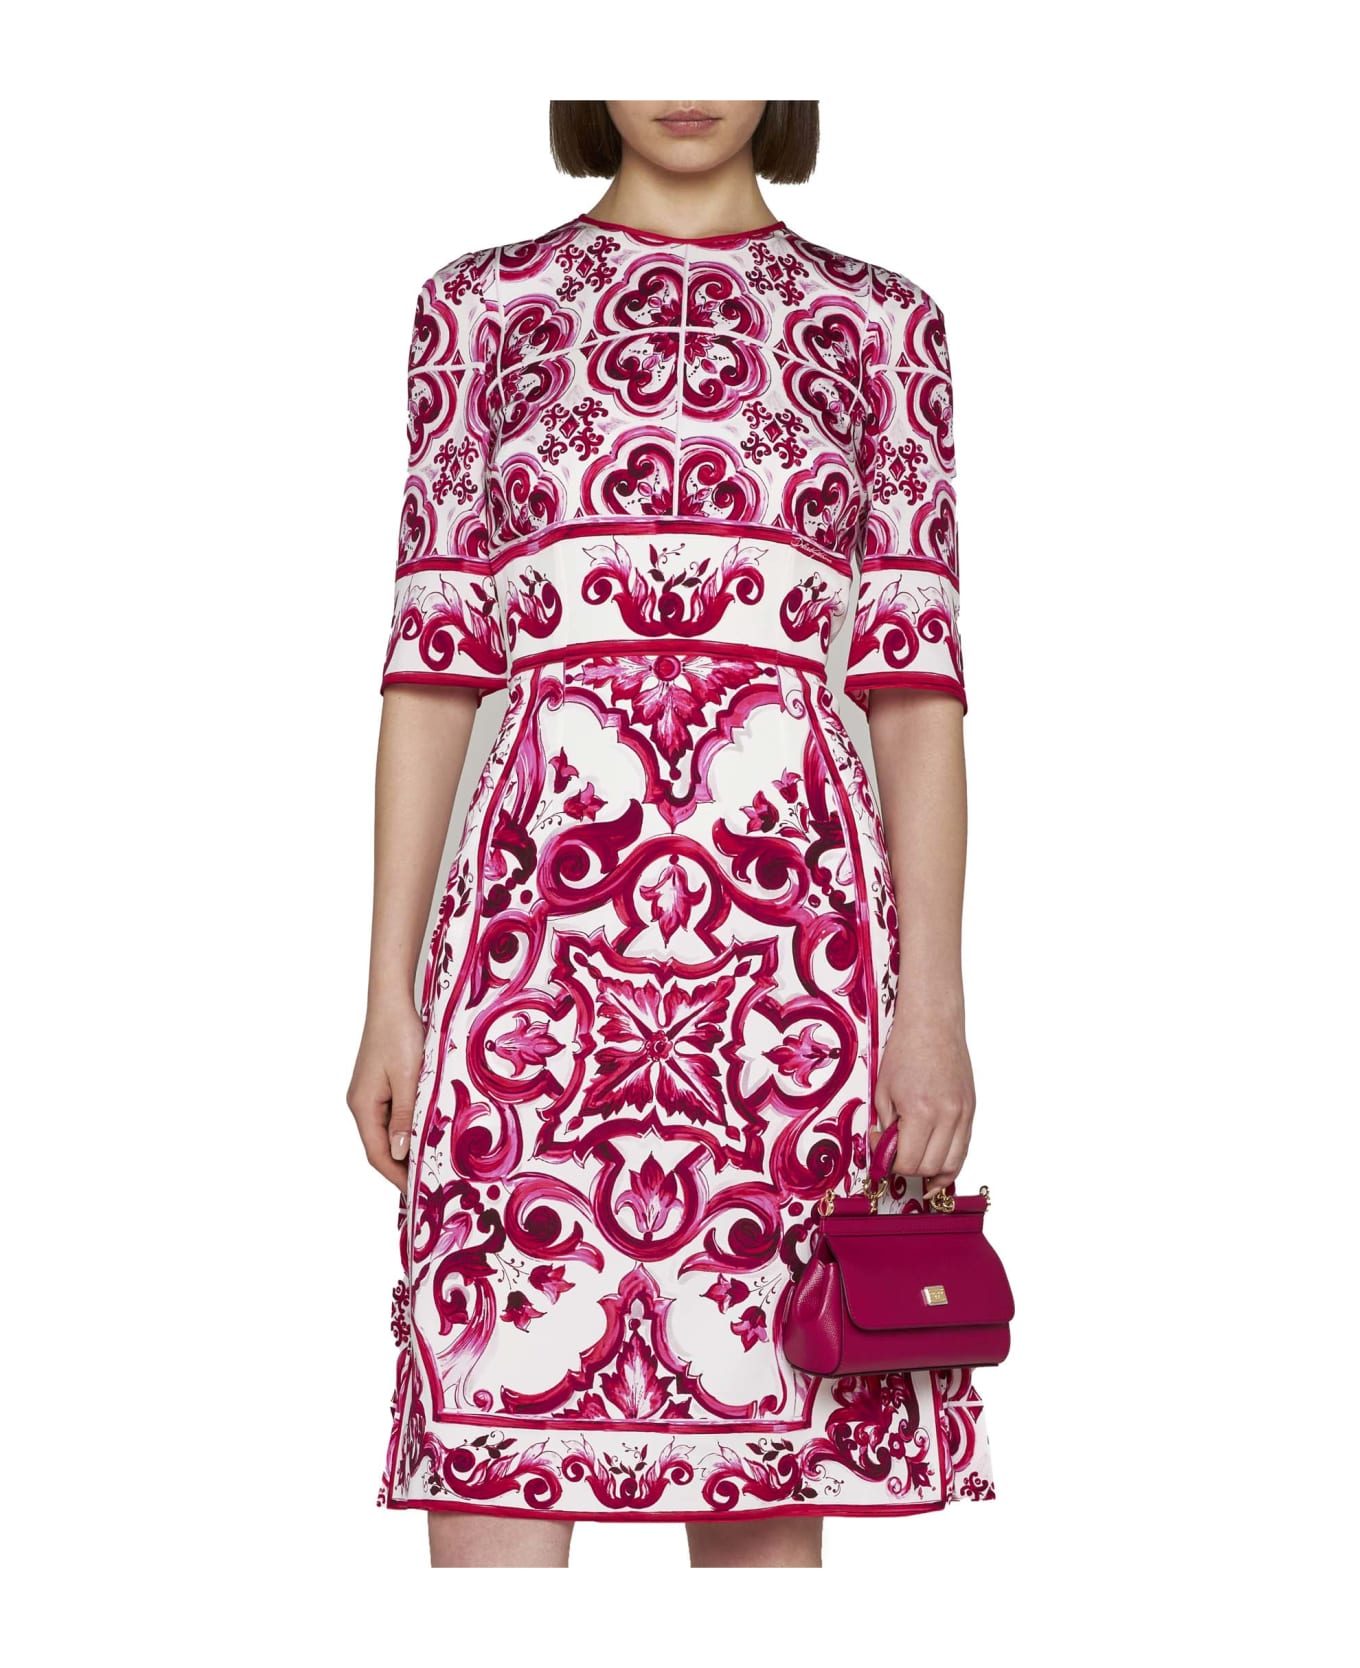 Dolce & Gabbana Printed Dress - Multicolor